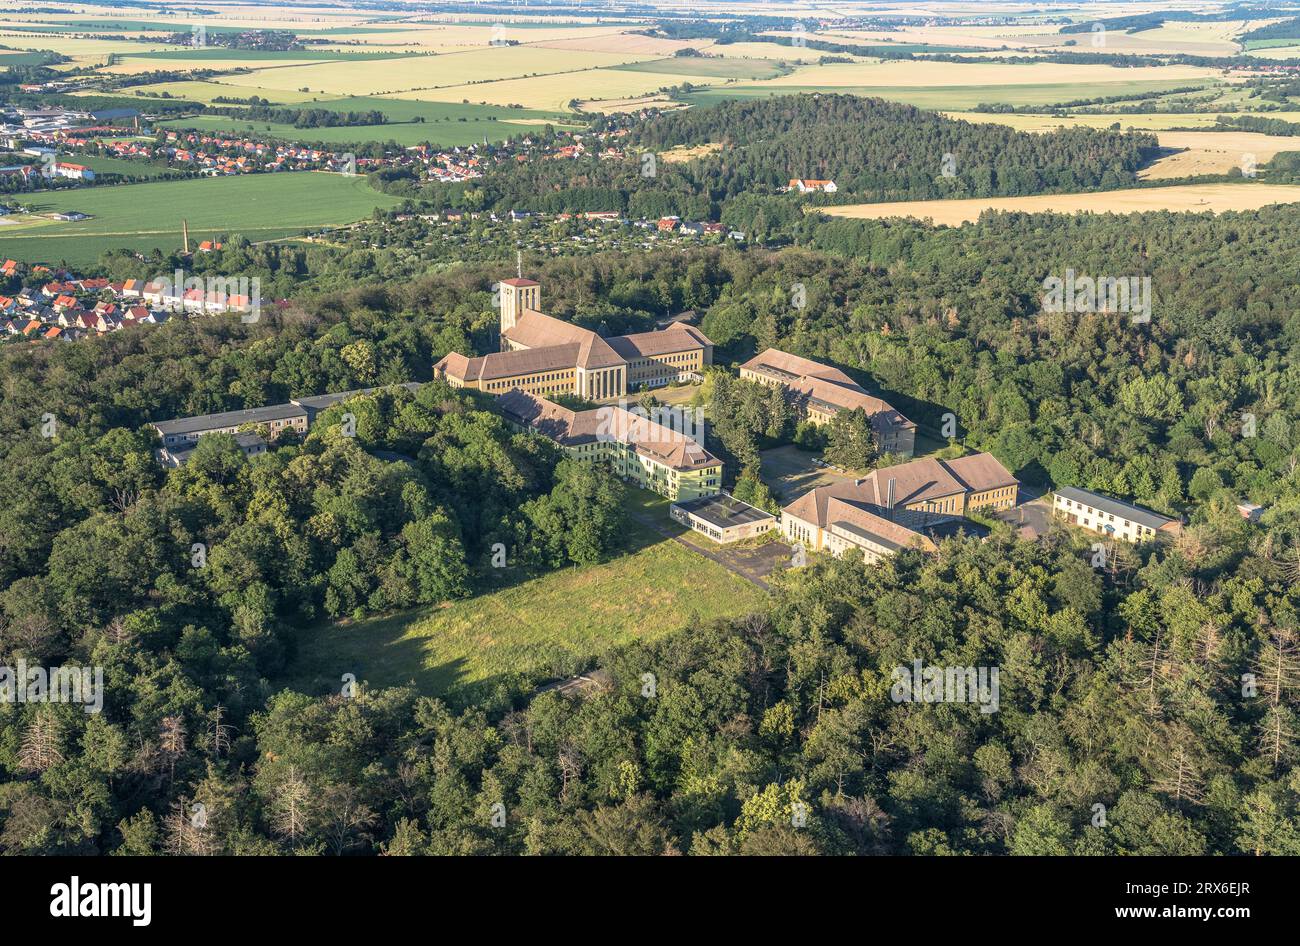 Germania, Sassonia-Anhalt, Ballenstedt, vista aerea del complesso Ziegenberg circondato da alberi verdi Foto Stock